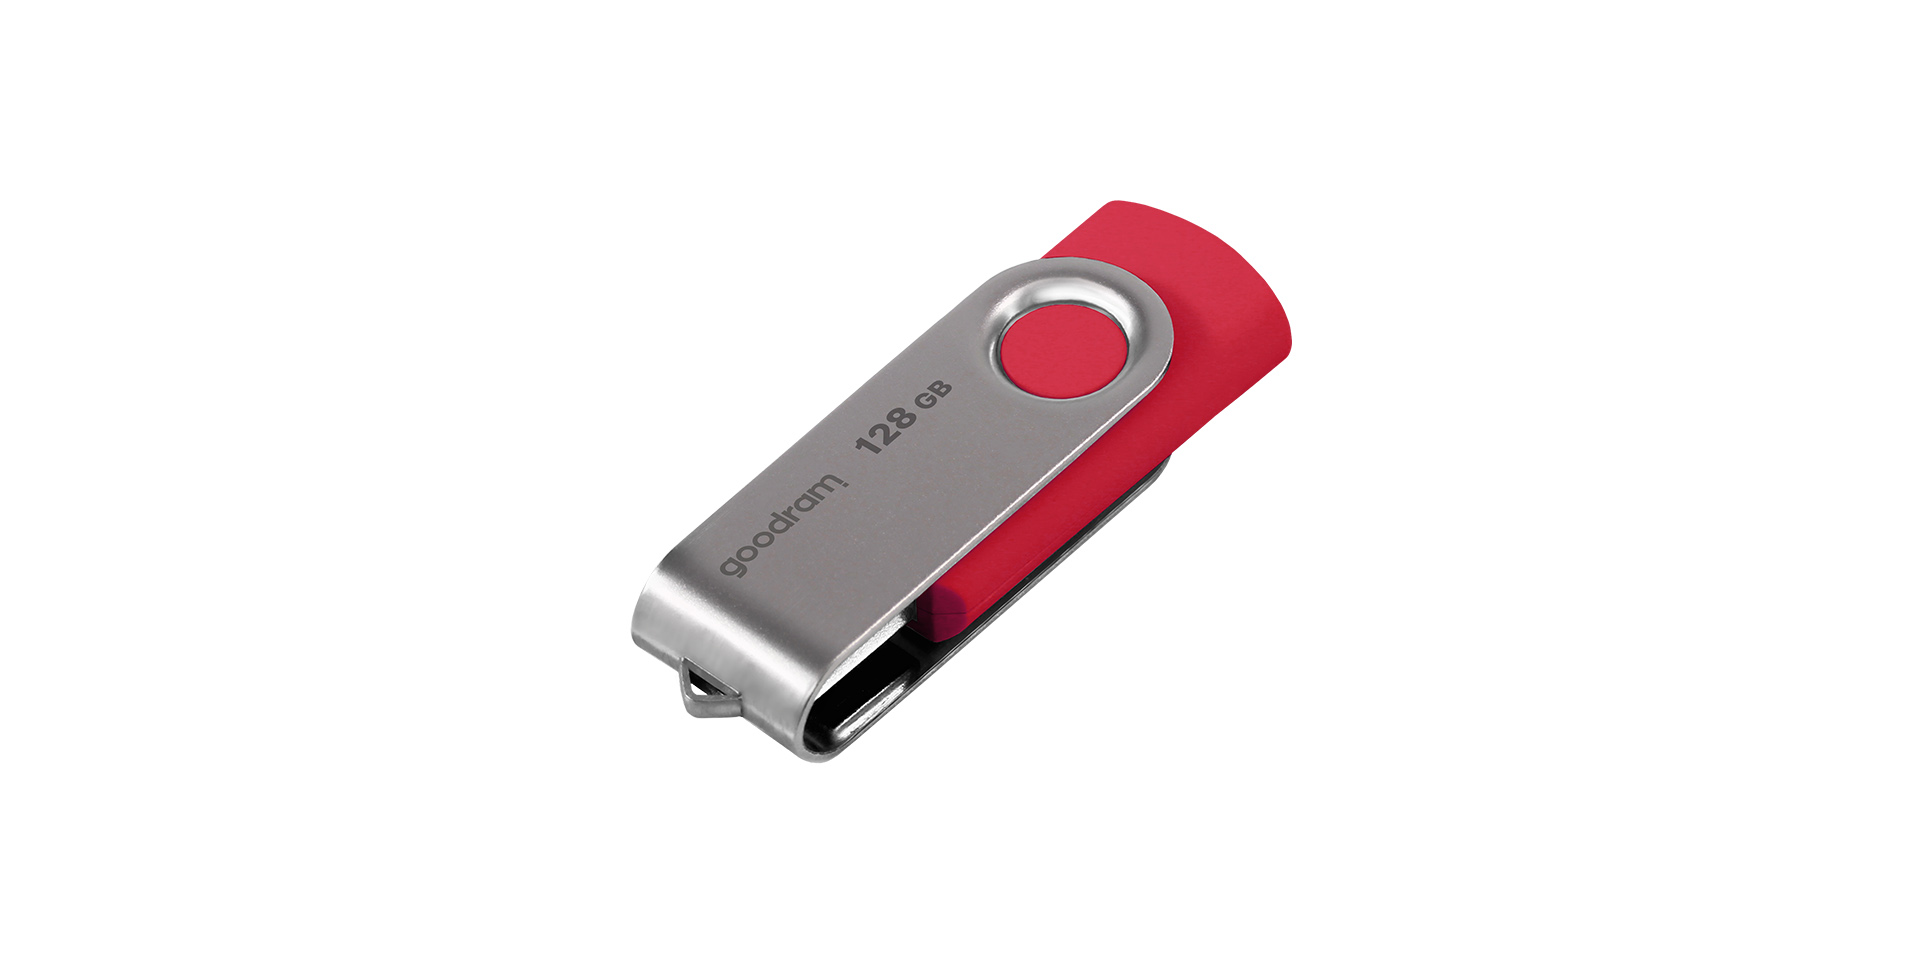 USB flash disk 128Gb Goodram UTS3 128Gb (UTS3-1280R0R11) Red ( , /, USB3)